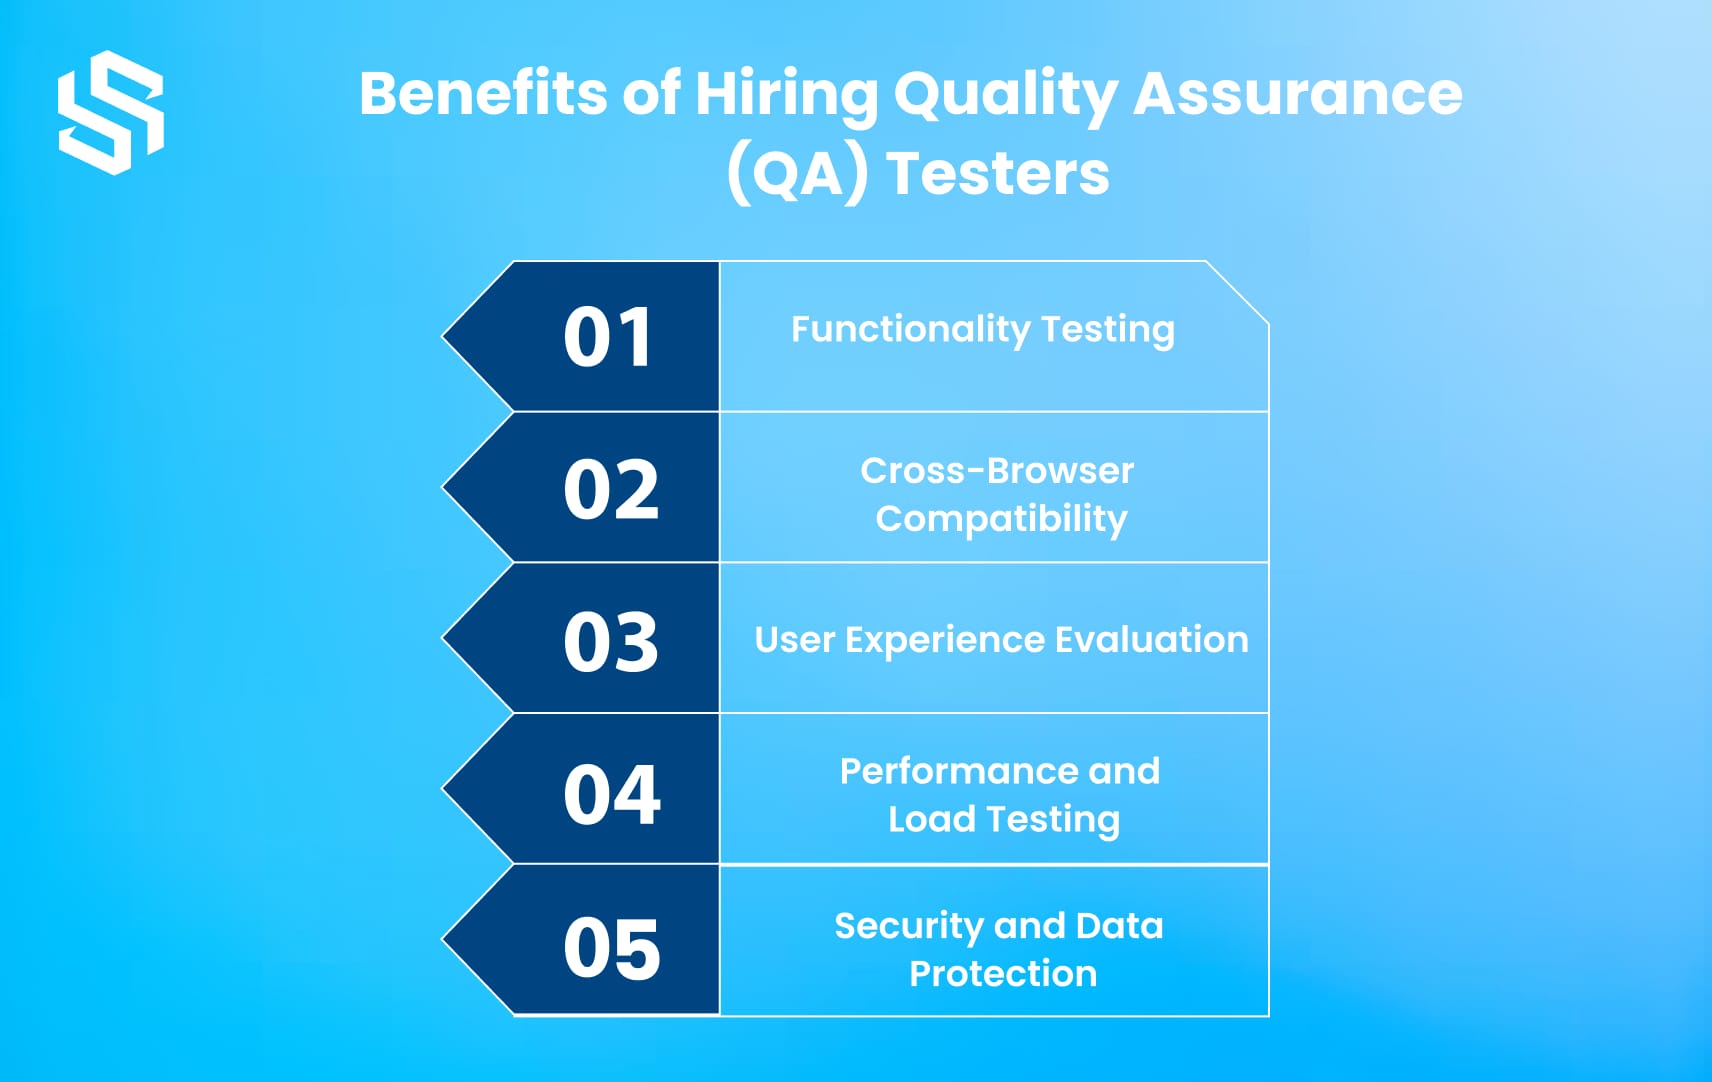 Benefits of Hiring Quality Assurance (QA) Testers